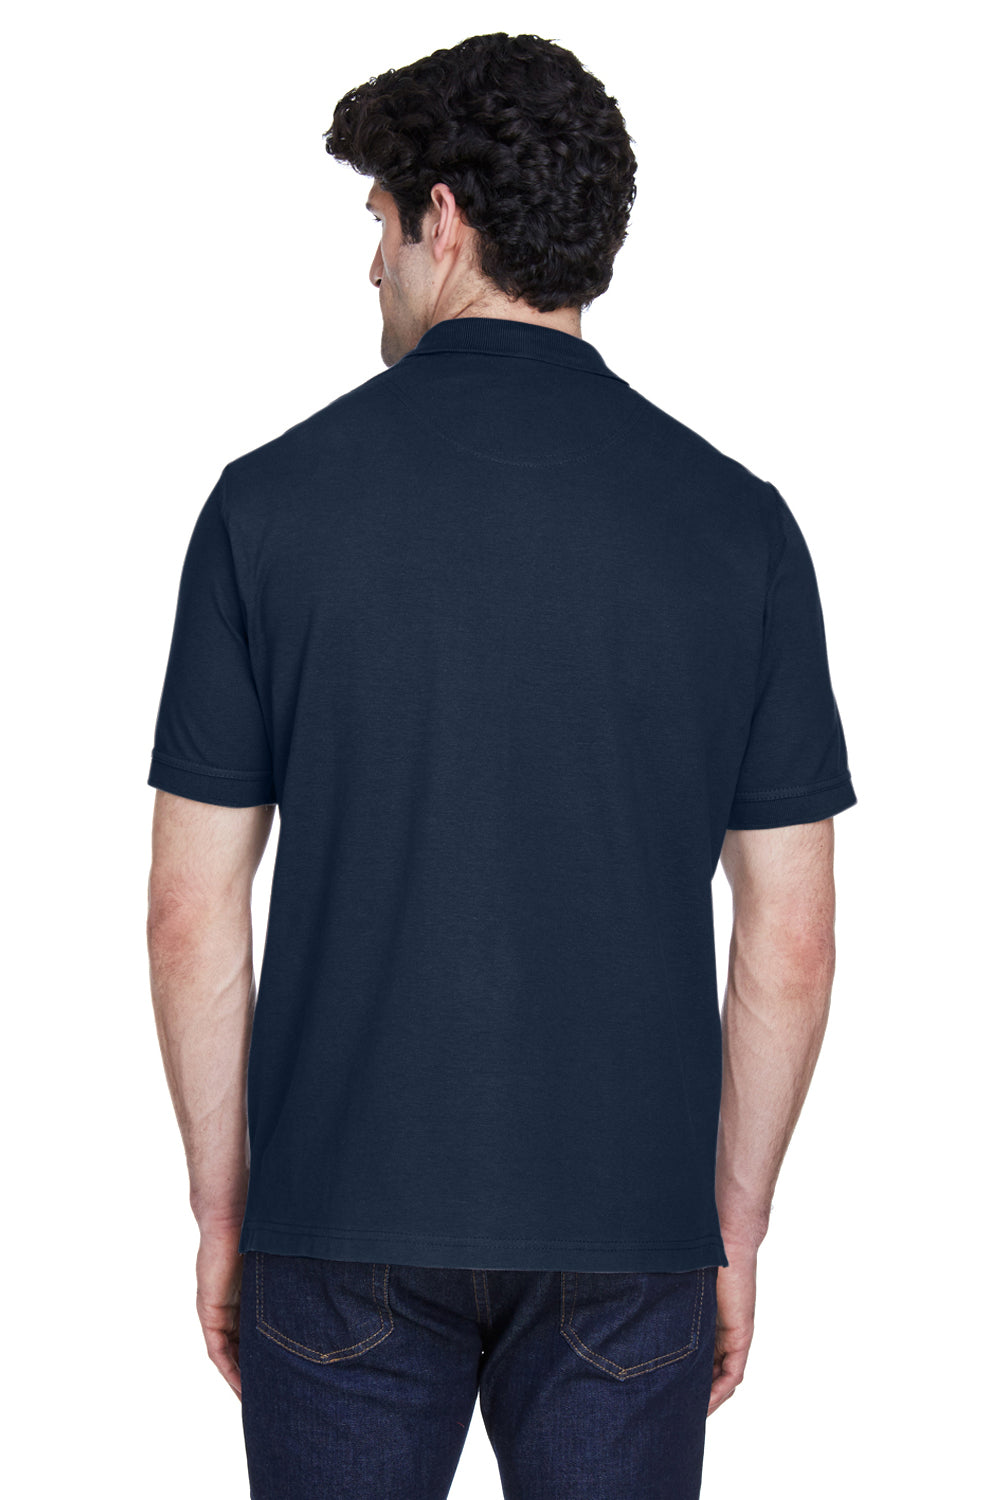 UltraClub 8535 Mens Classic Short Sleeve Polo Shirt Navy Blue Back